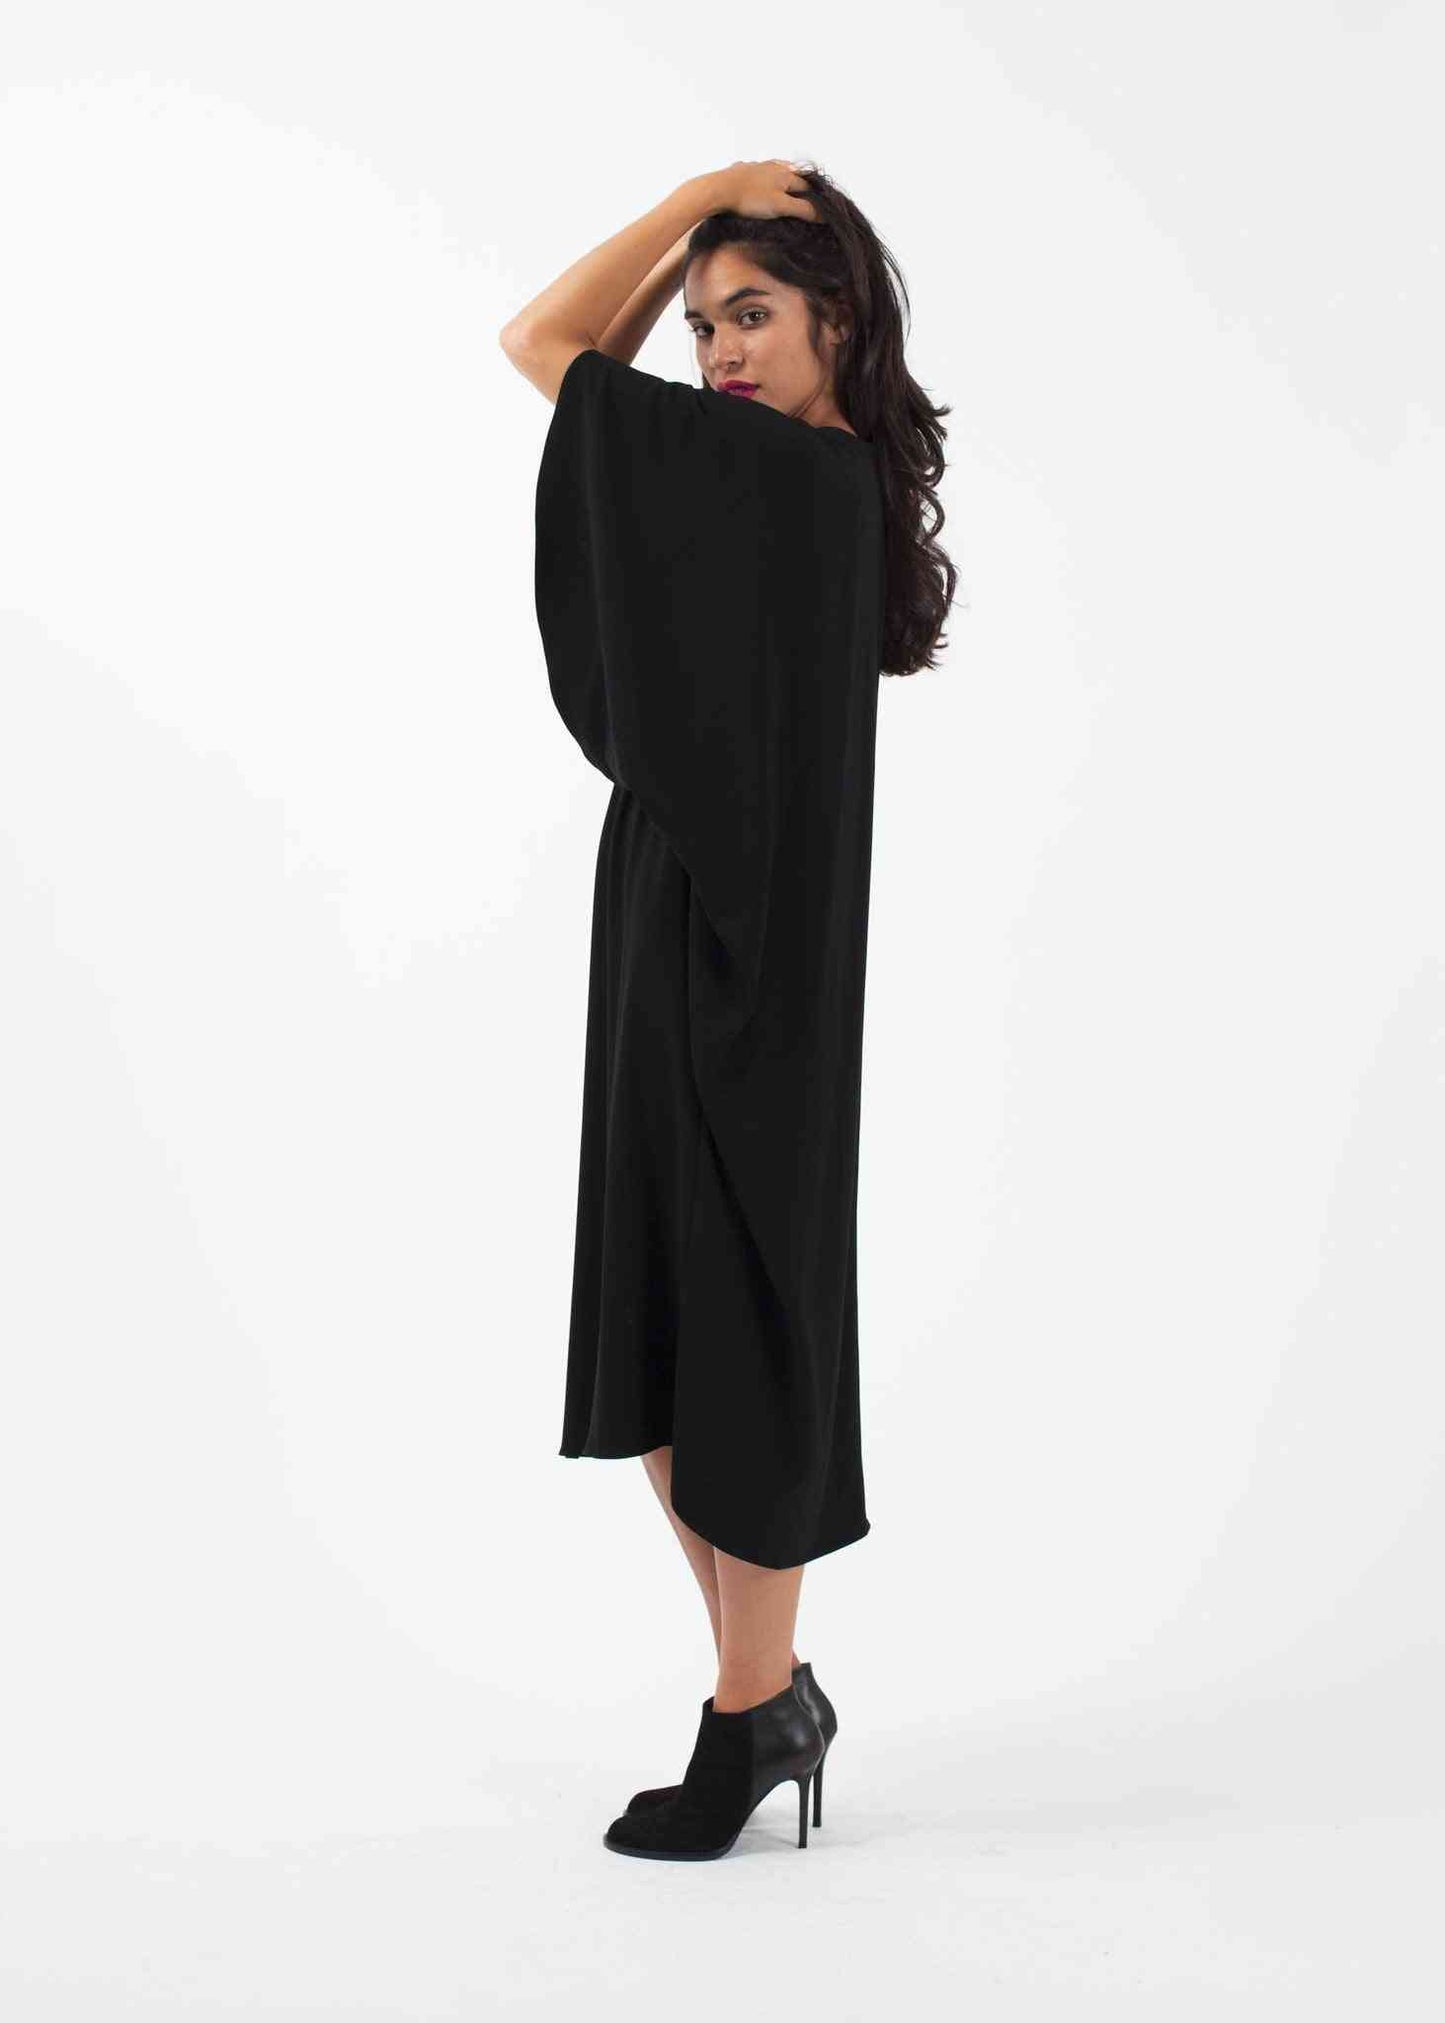 Elastic Waist Dress Co women's dresses X-Small Black 7572880809